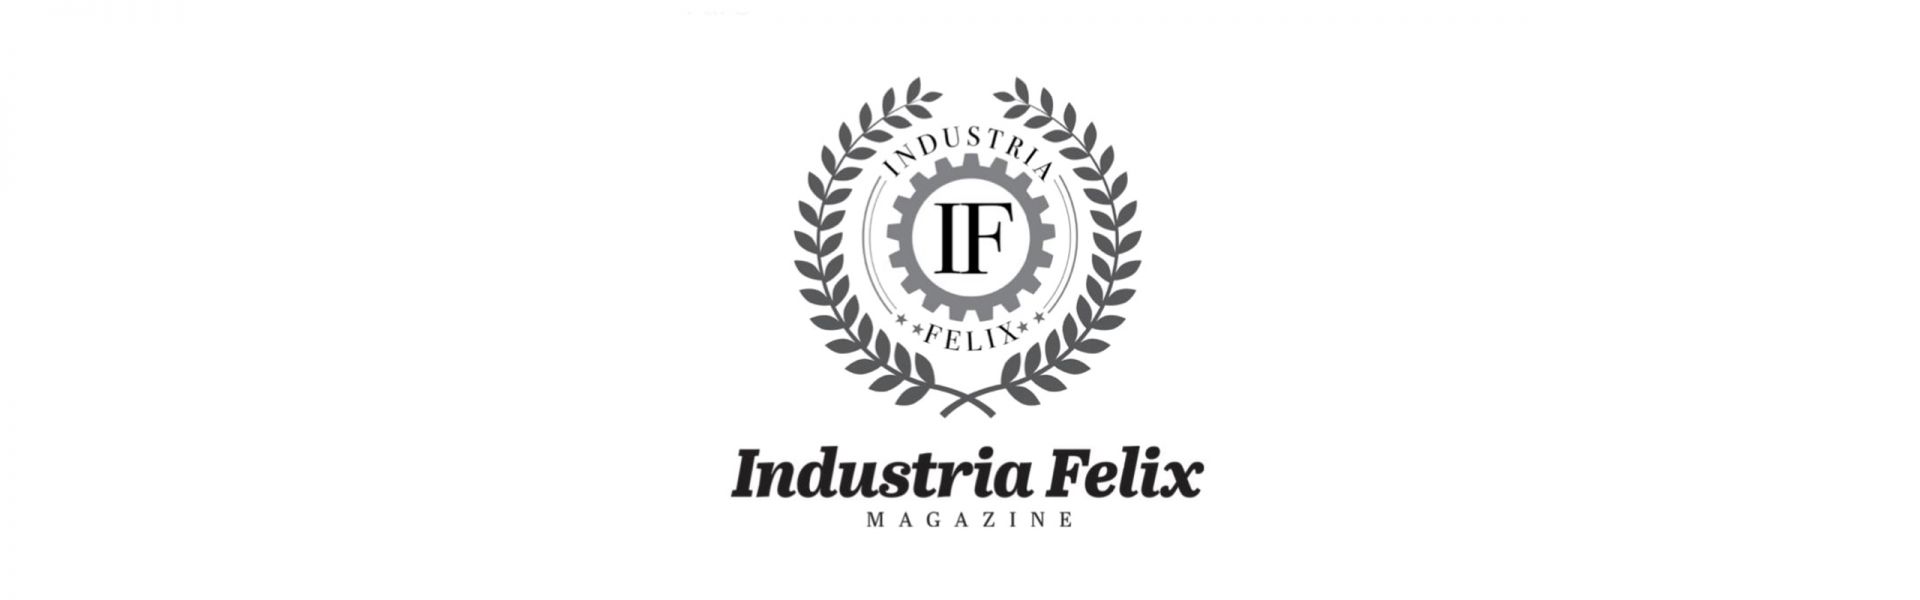 <div class='thumb_wid'><img src='https://www.divella.it/wp-content/uploads/2022/12/f-divella-spa-riceve-il-premio-nazionale-industria-felix.jpg'></div><div class='rightwid'><div class='datel'>23 November 2020</div> F. Divella S.p.A. receives the National “Industria Felix” Award</div>